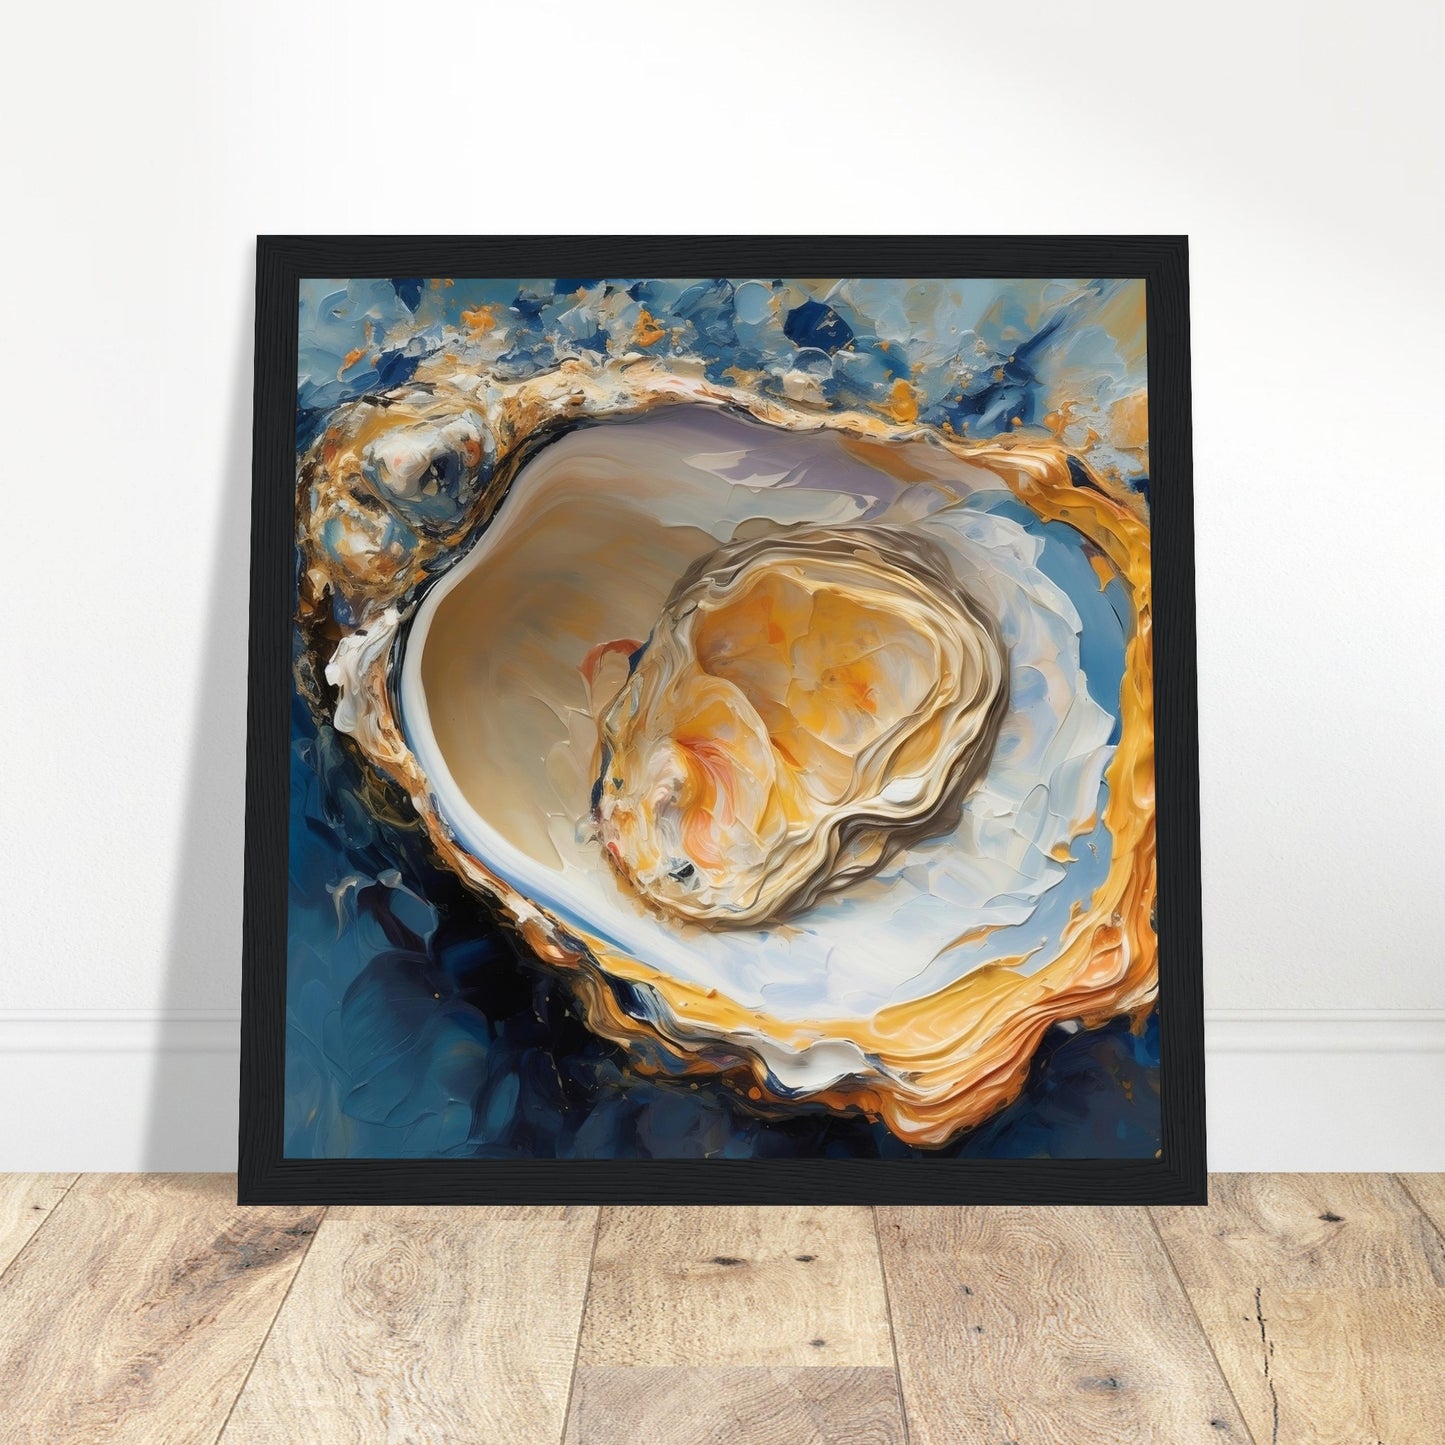 Pearl Elegance Sea Artwork #2 - Print Room Ltd Wood frame 50x50 cm / 20x20"